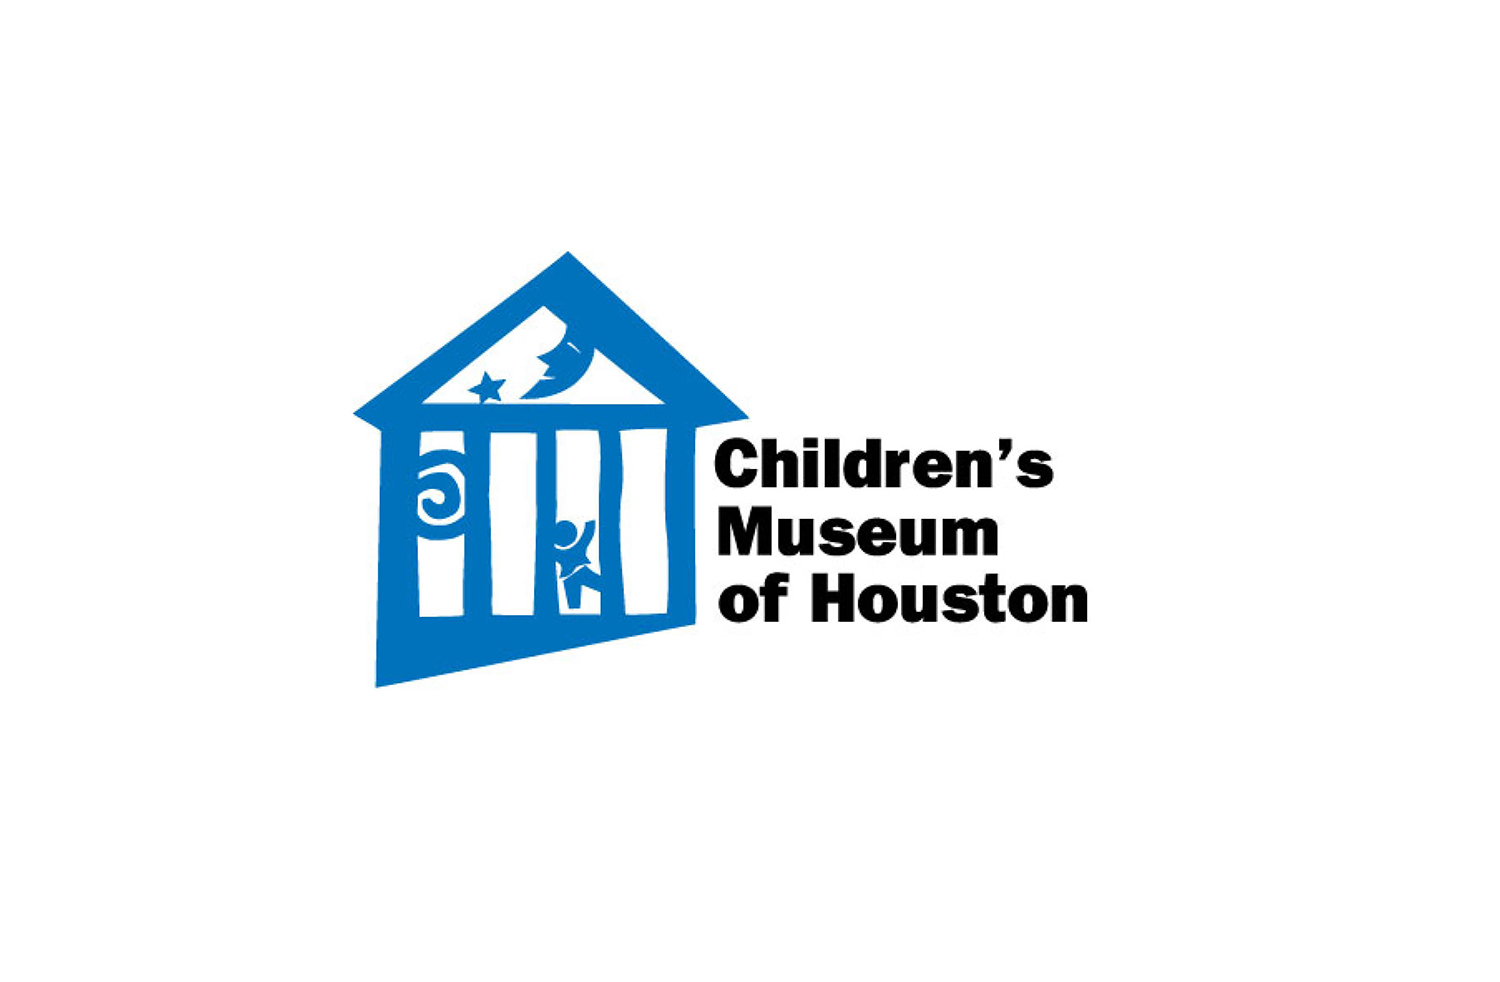 Boss_Display_Client_Childrens_Museum_of_Houston_Logo.jpg